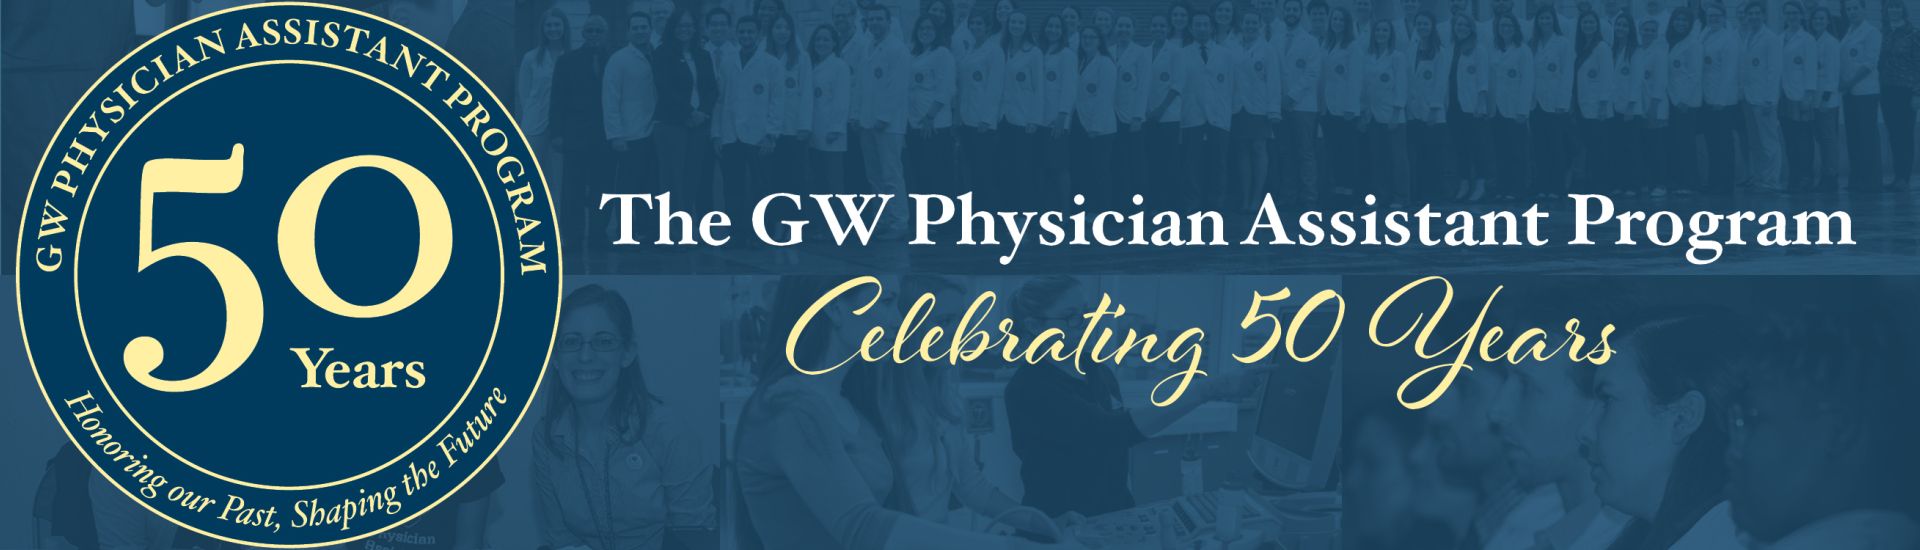 The GW PA Program Celebrating 50 years